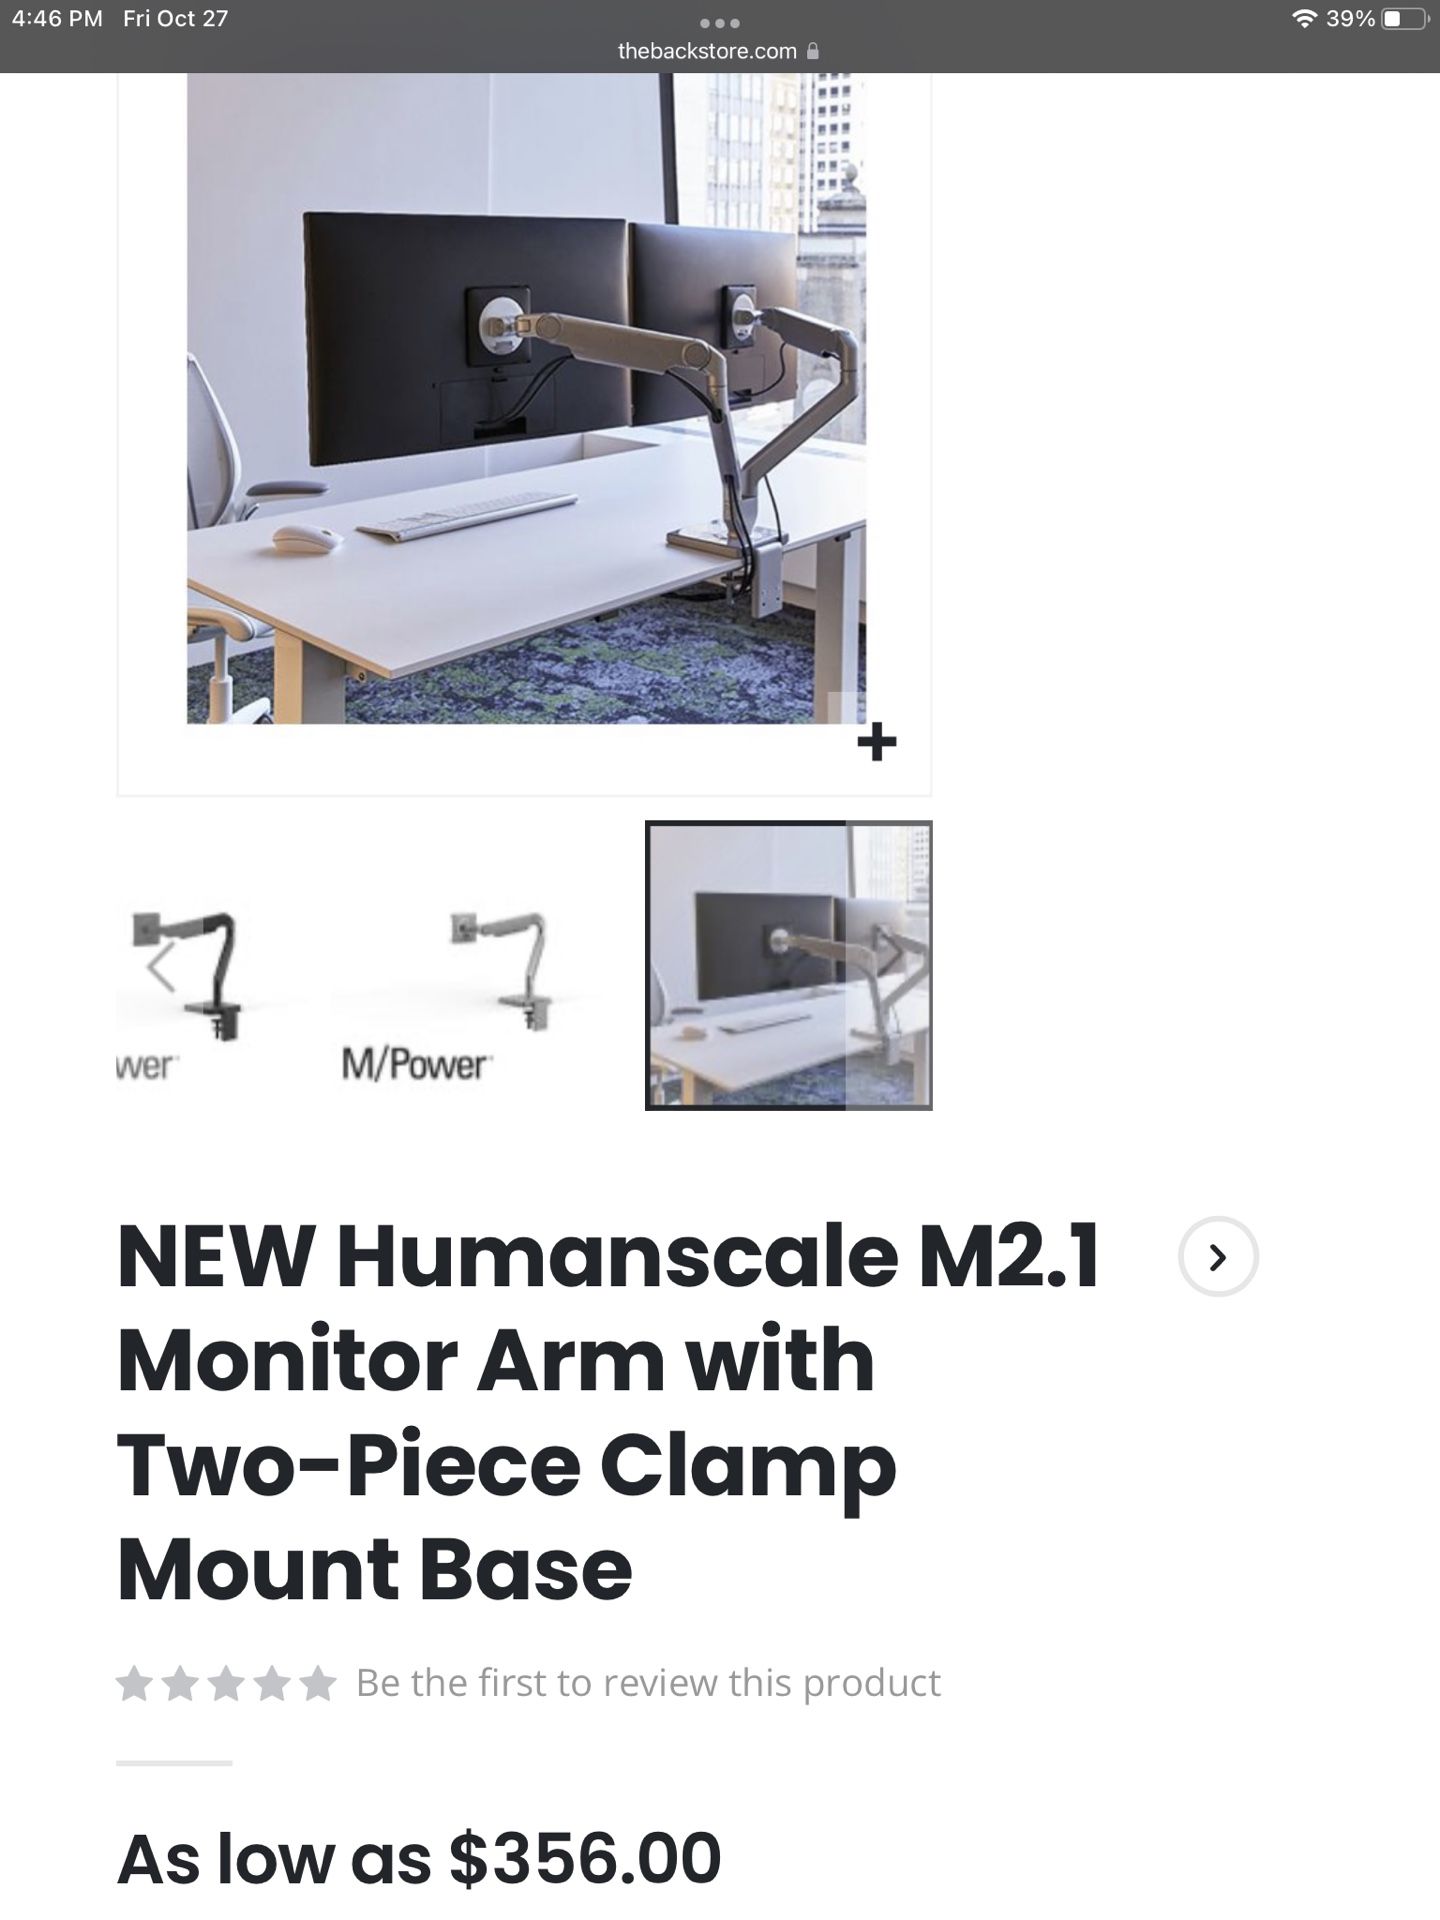 Human scale Dual Monitor arm